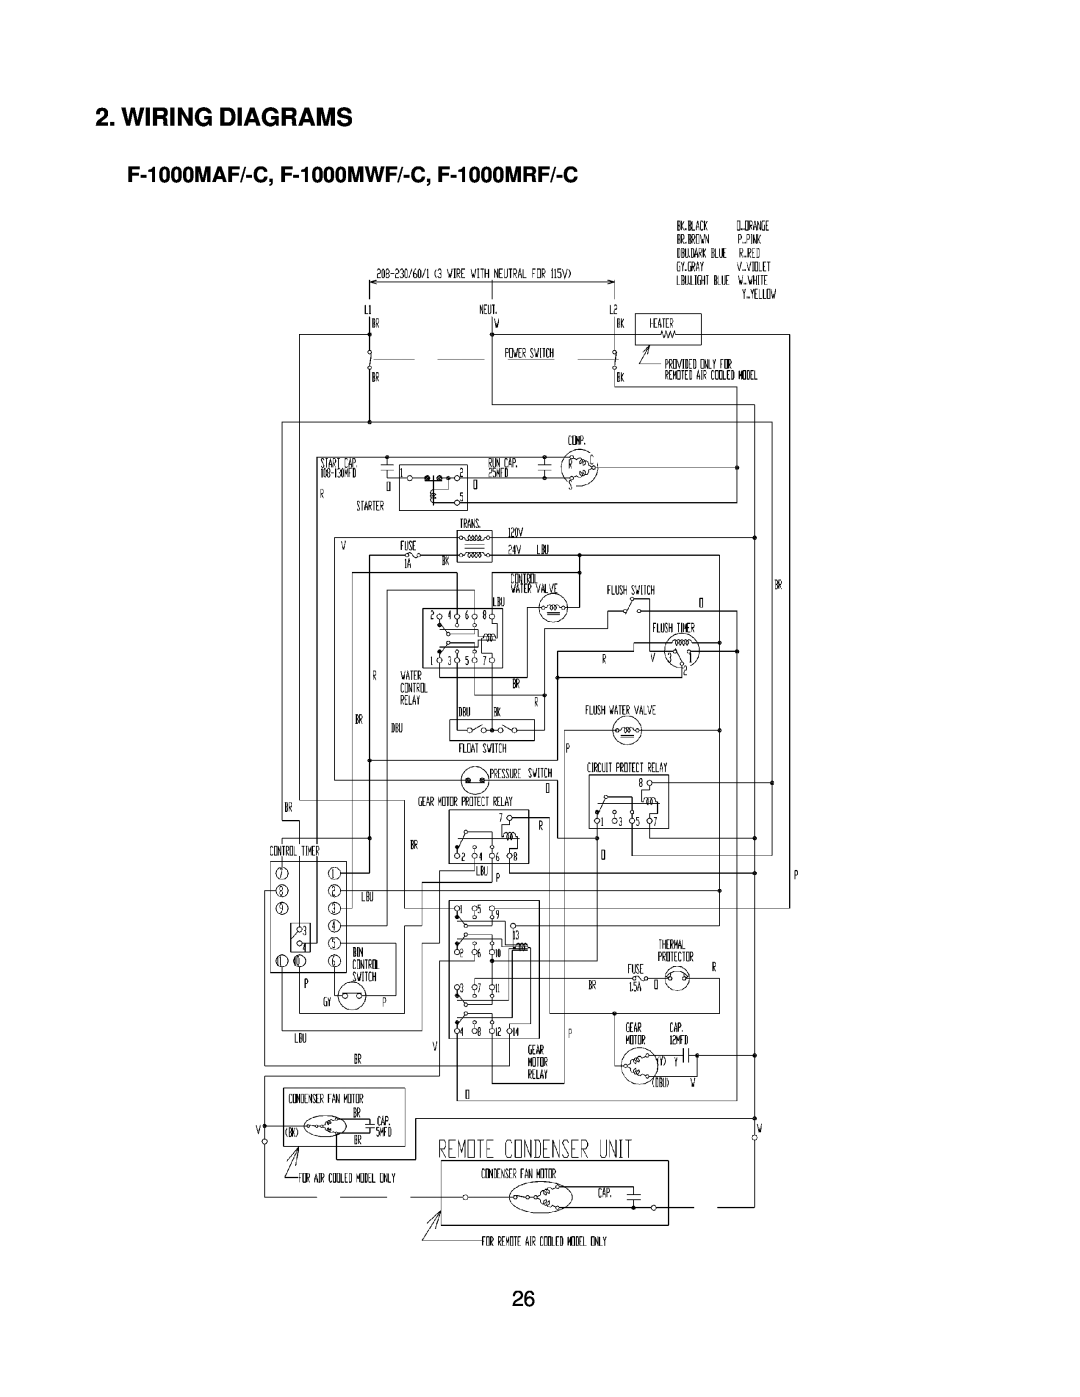 Hoshizaki F-1000MLF/-C service manual Wiring Diagrams, F-1000MAF/-C, F-1000MWF/-C, F-1000MRF/-C 